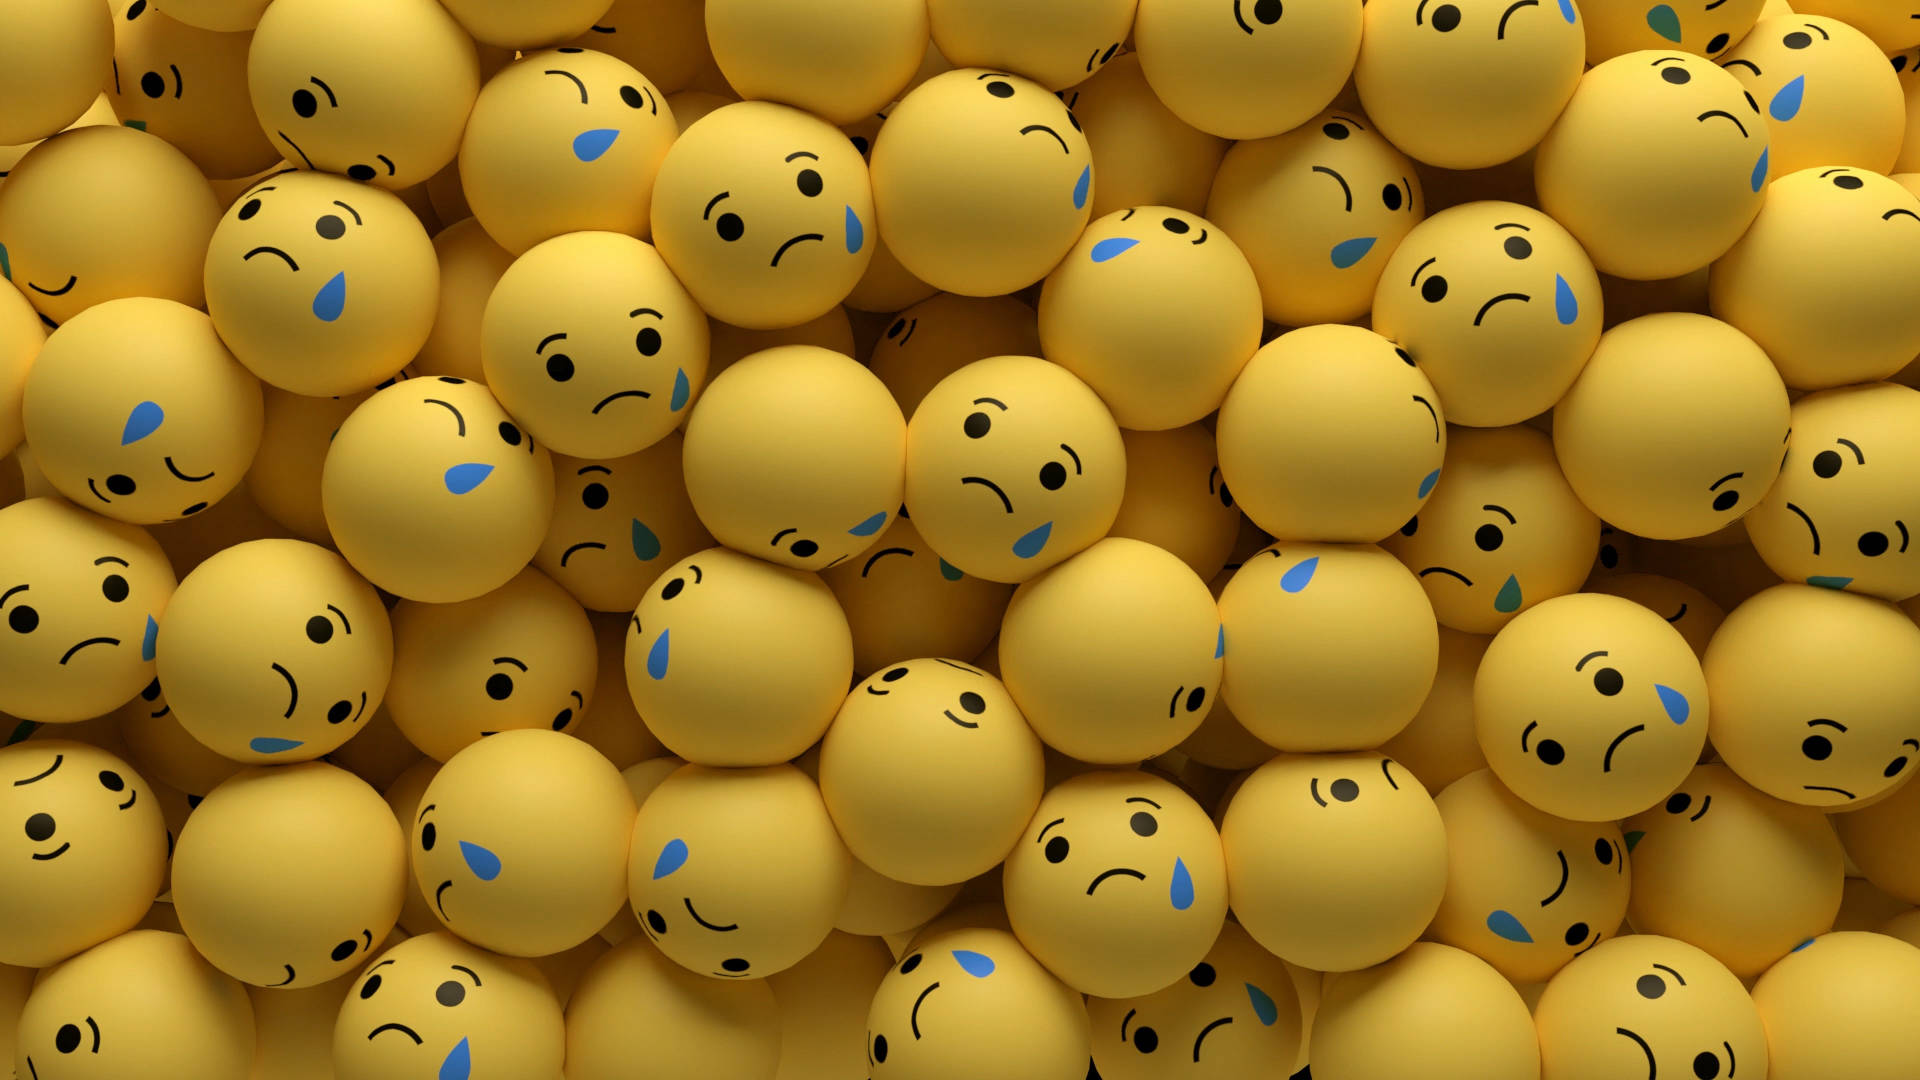 Sad Emoji Balls With Tear Drops Background